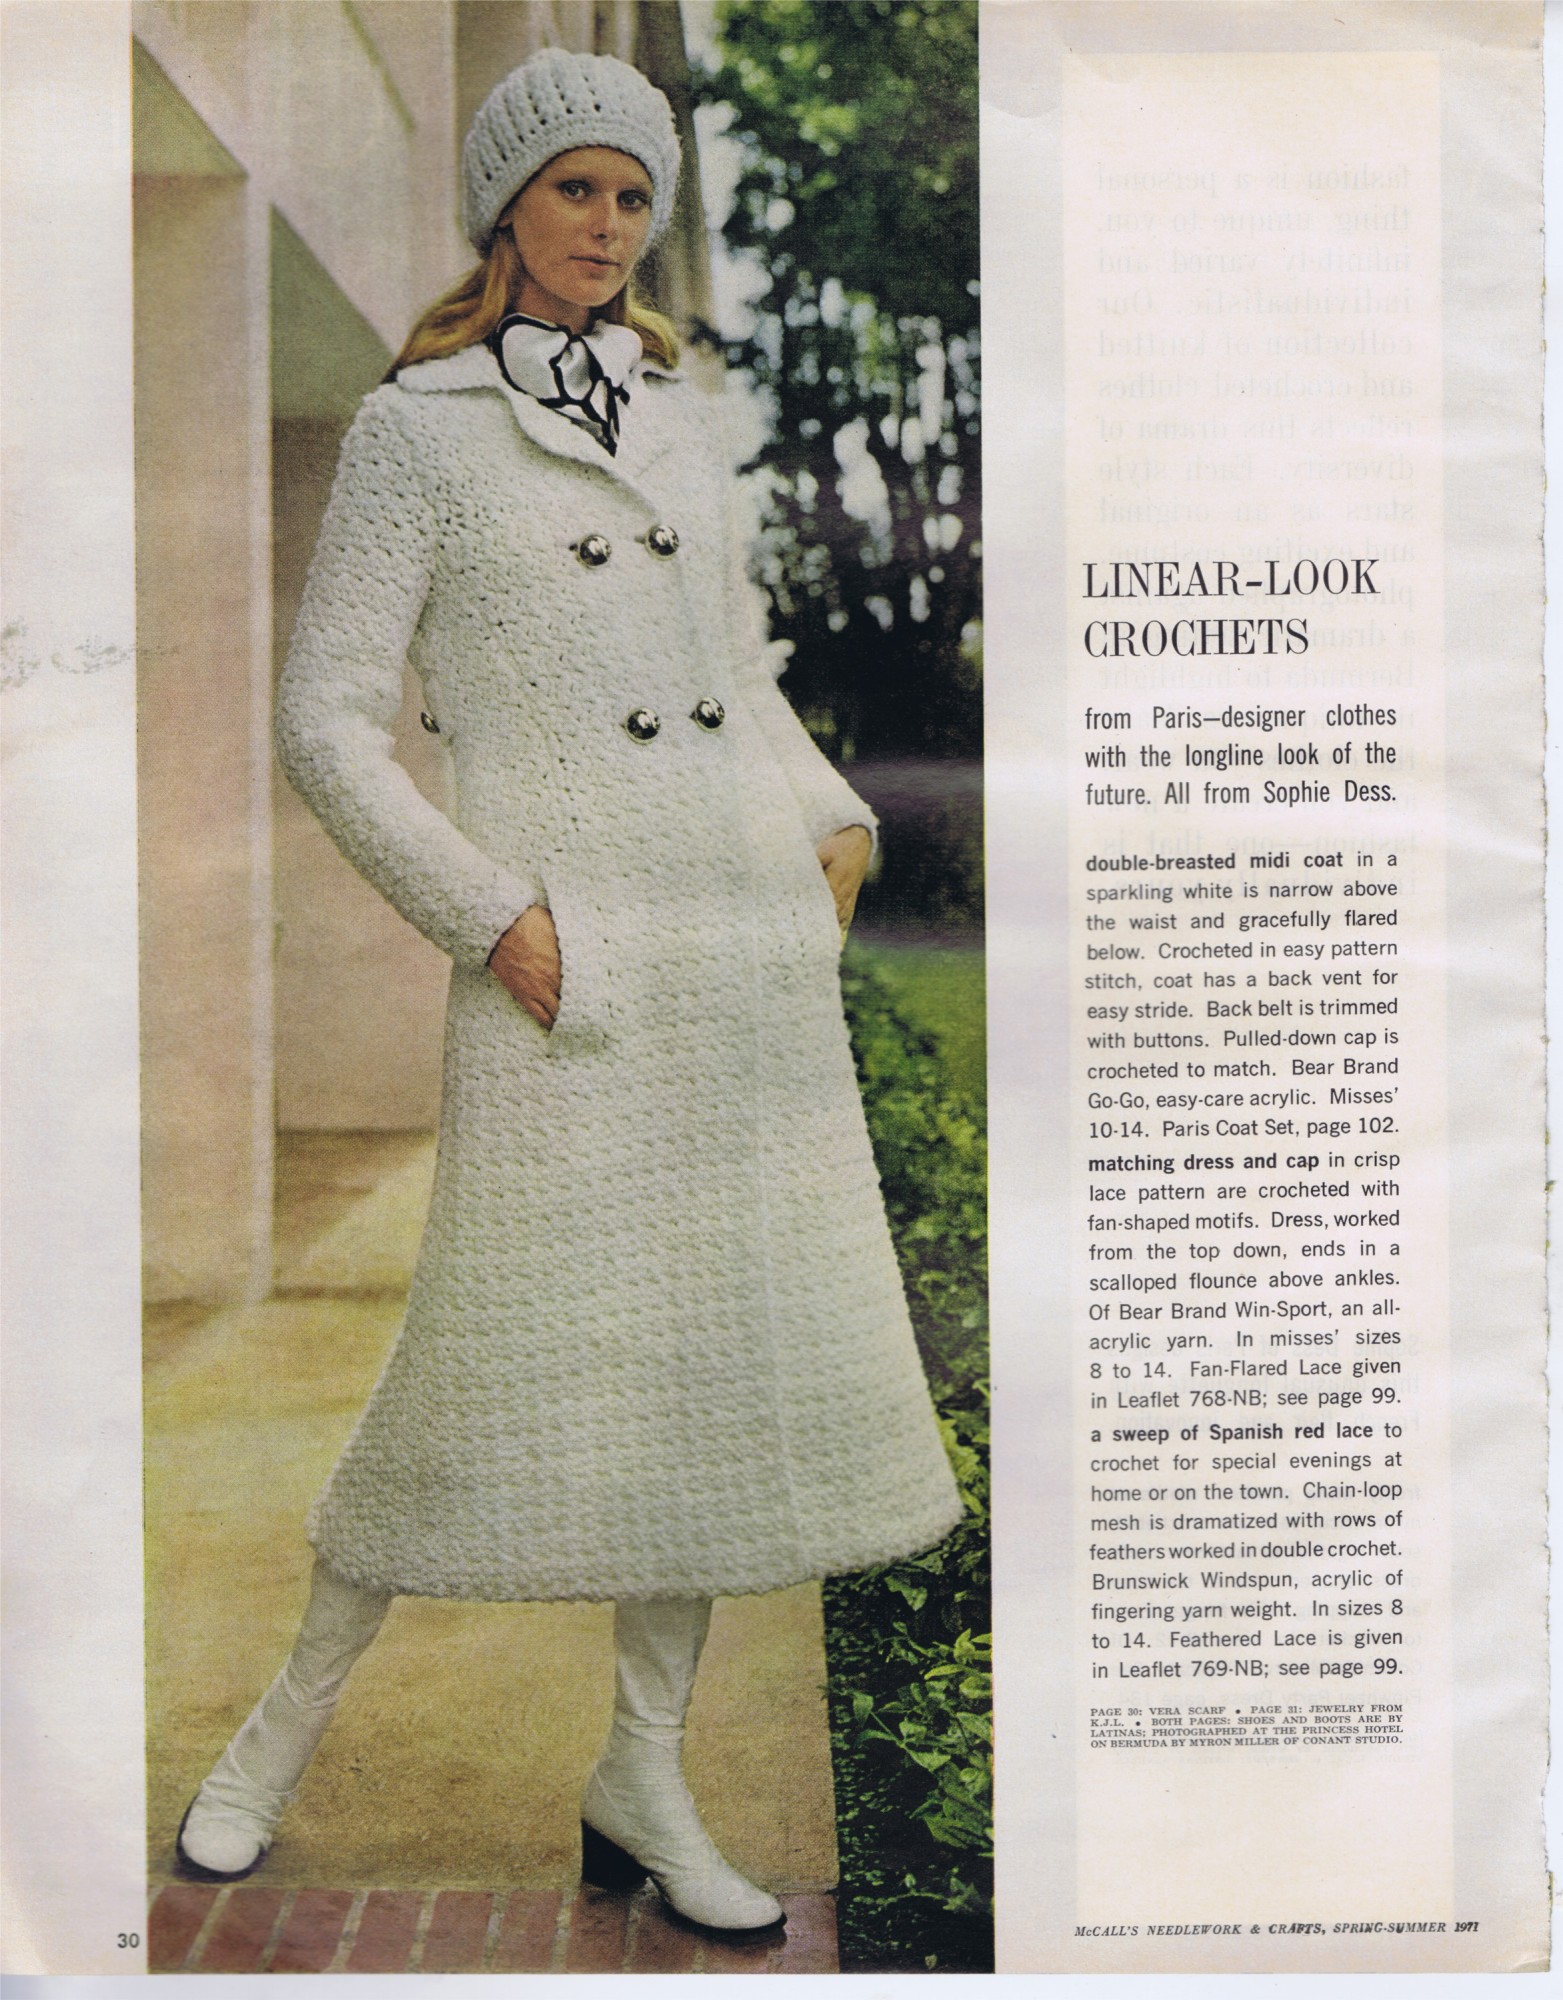 double breasted midi coat cap crochet pattern size 10-14 pattern vintage 70s bear brand